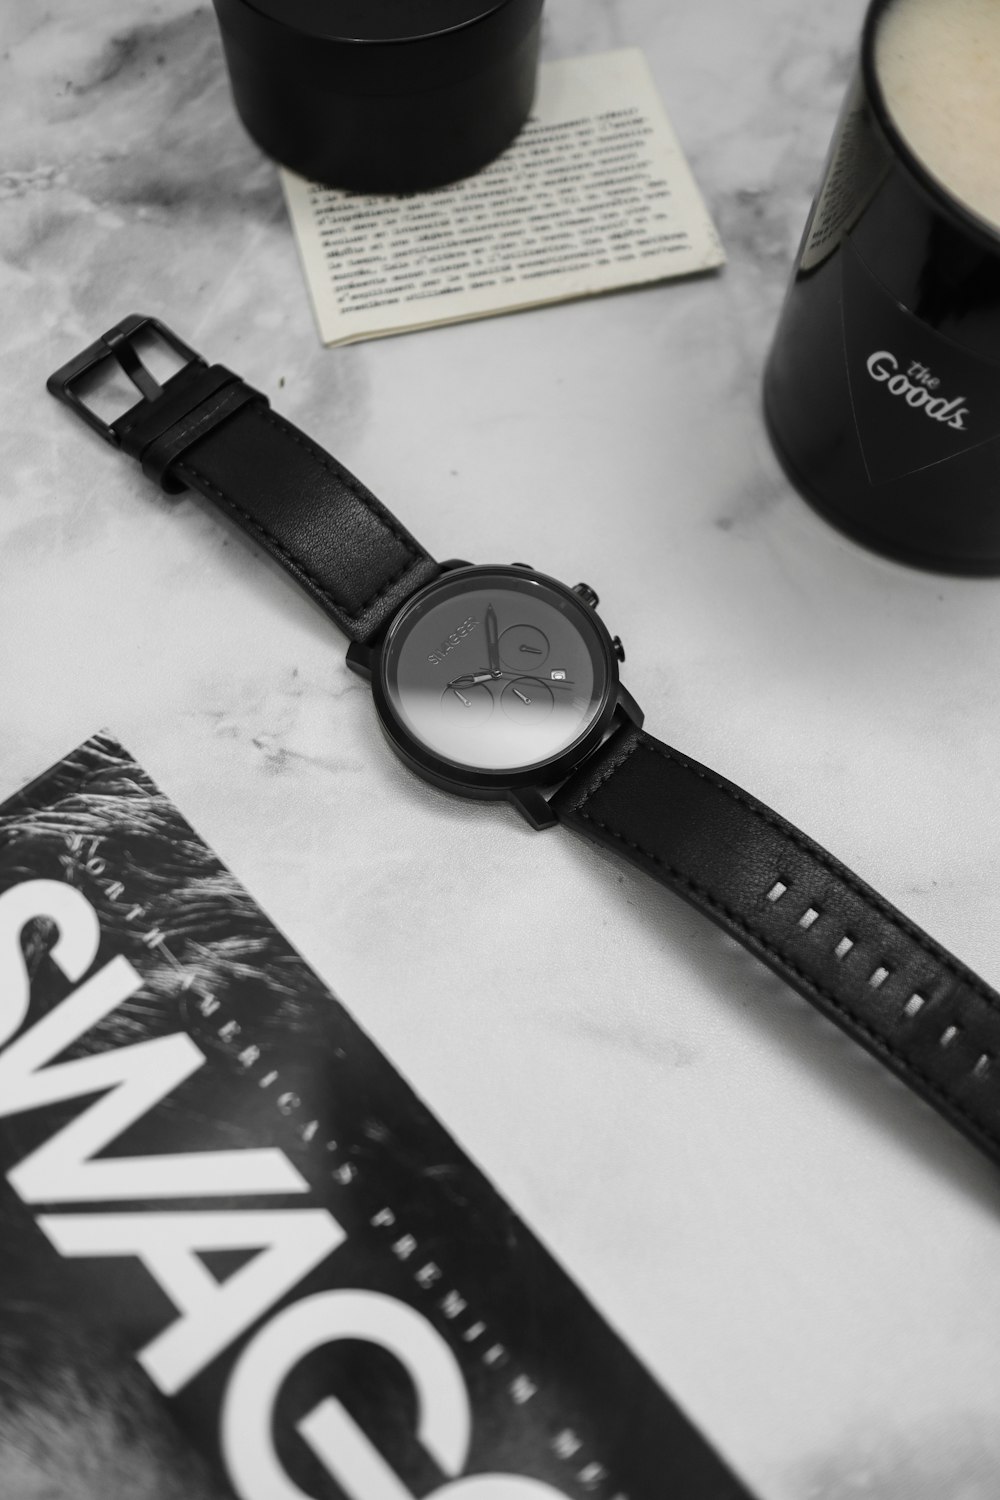 round black analog watch with band beside mug